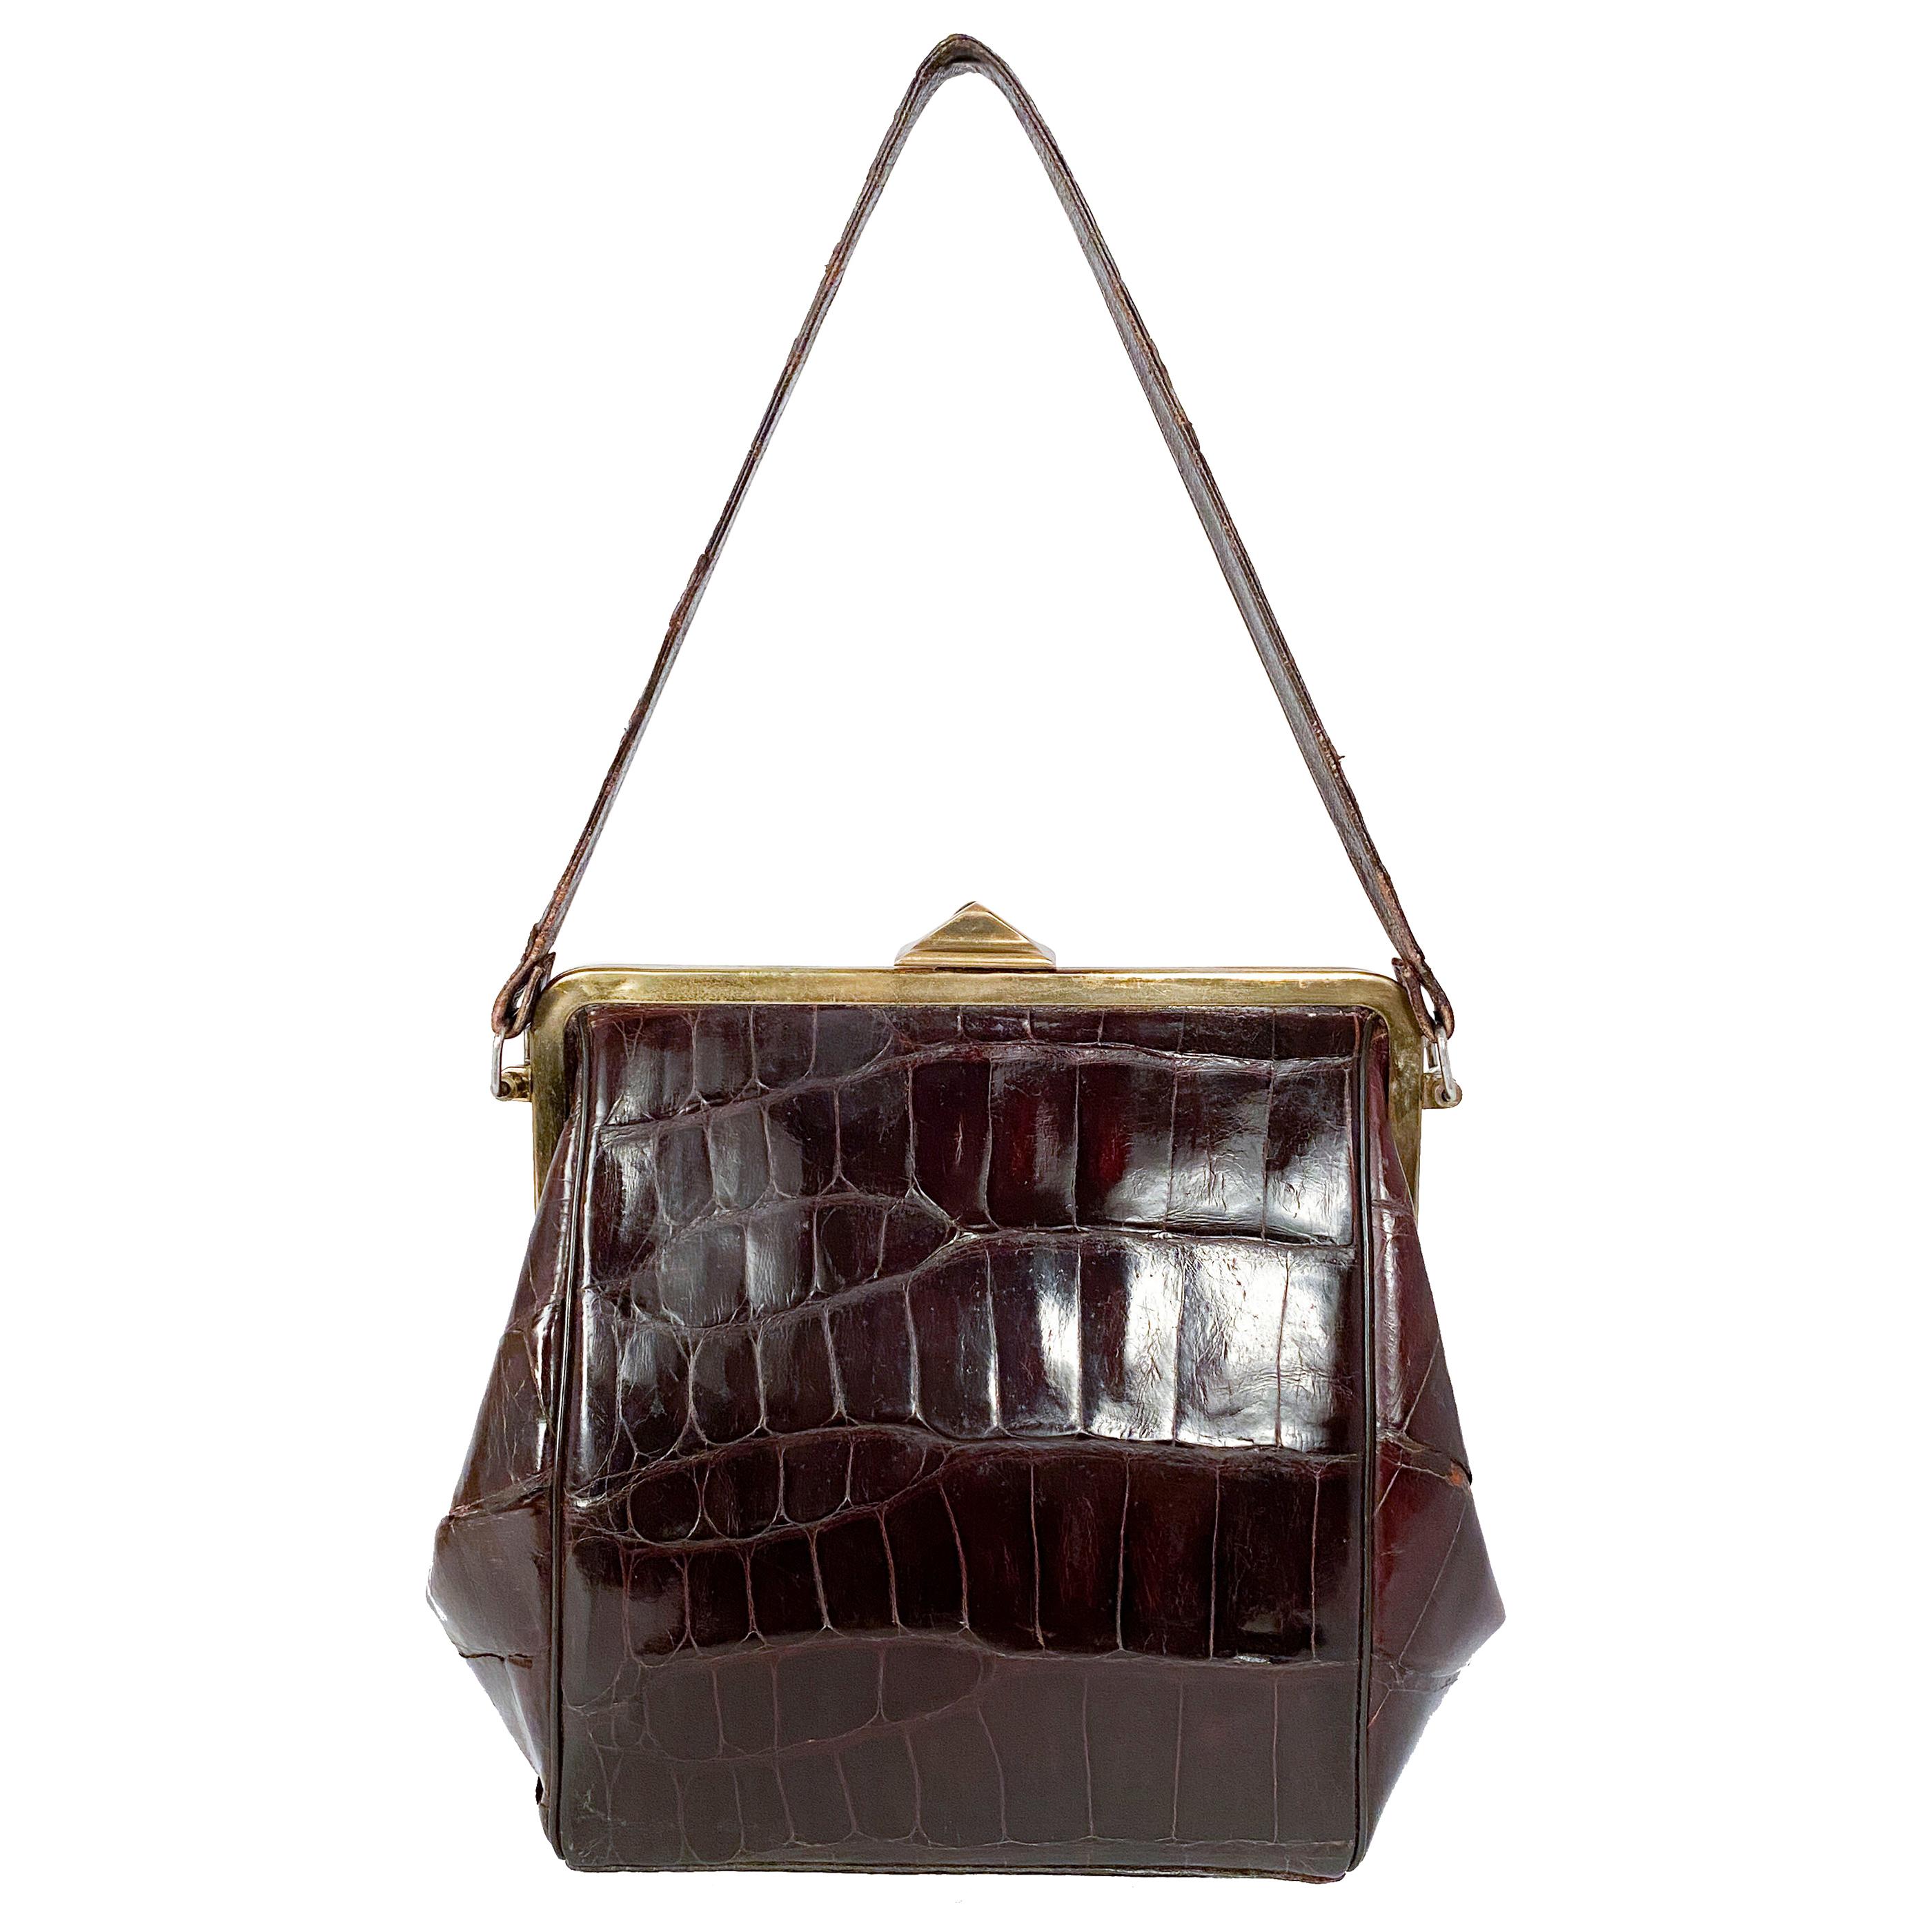 1940s Brown Alligator Handbag with Triangular Clasp Closure